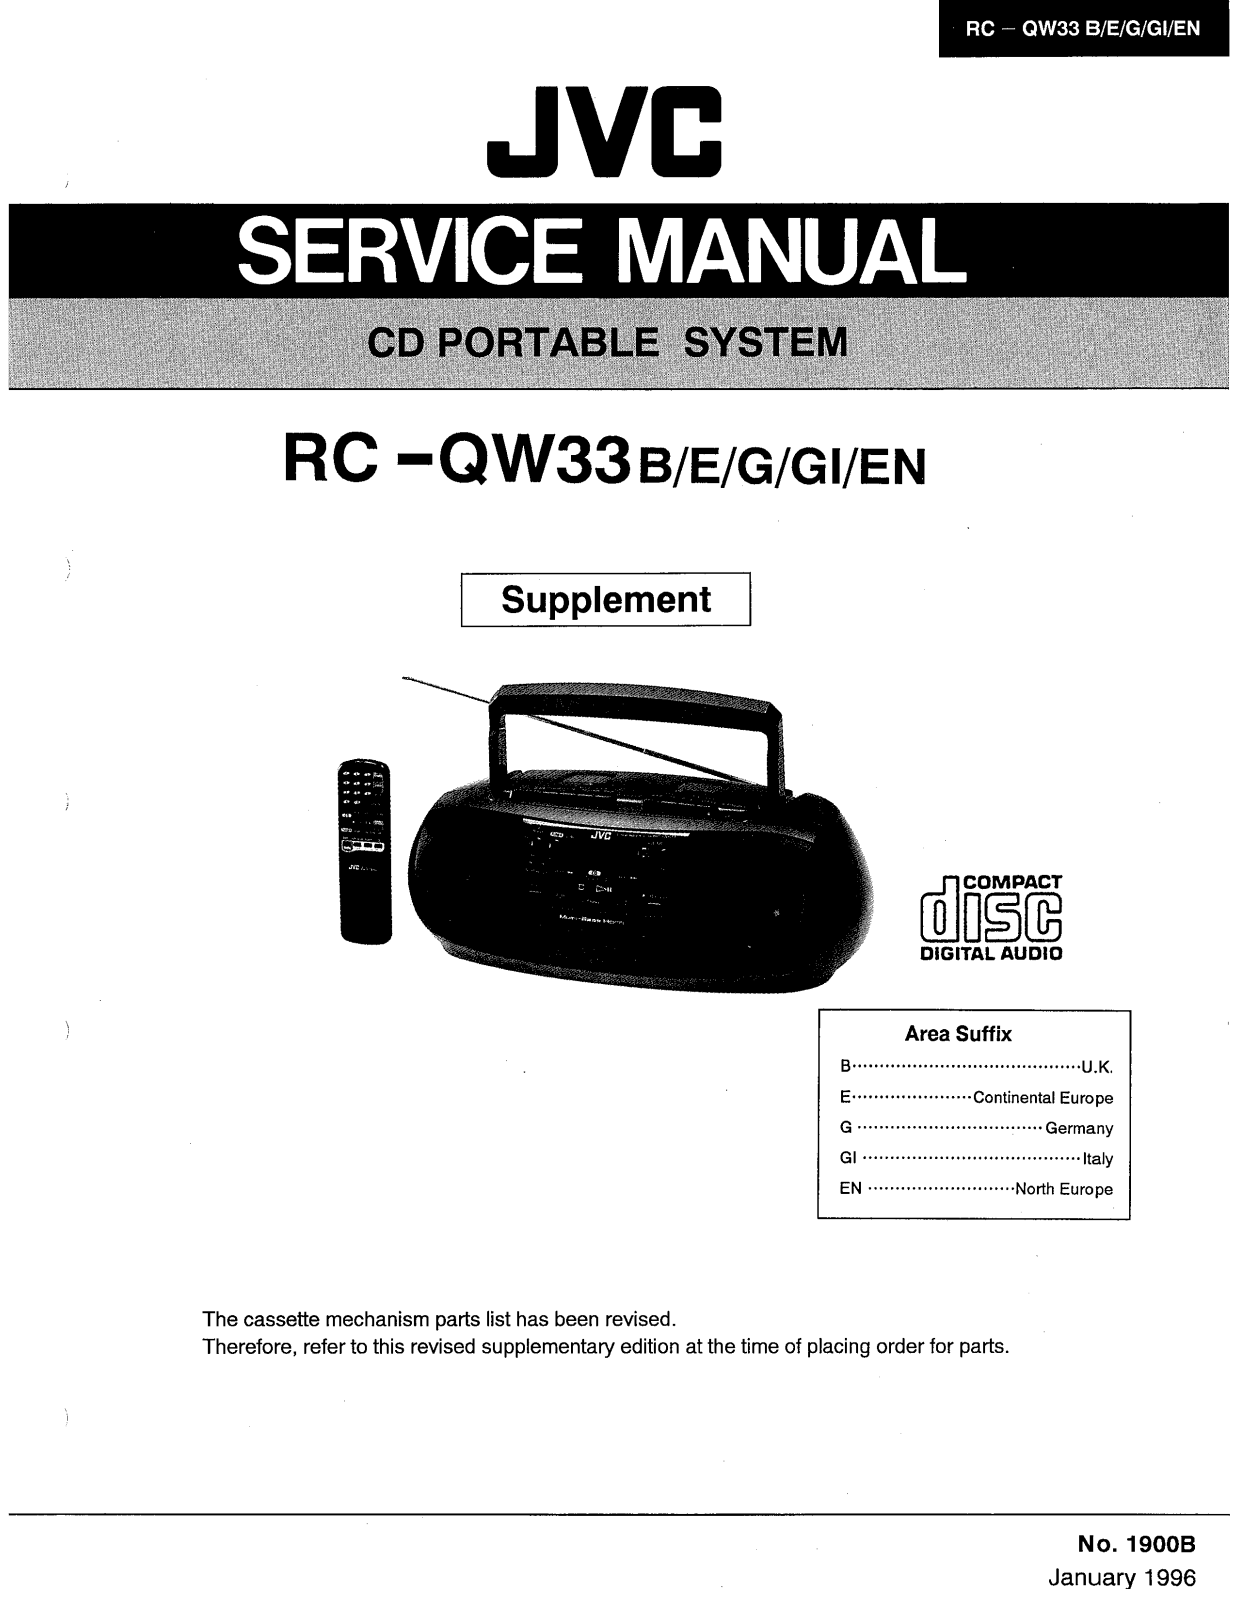 JVC RC-QW33B Service Manual